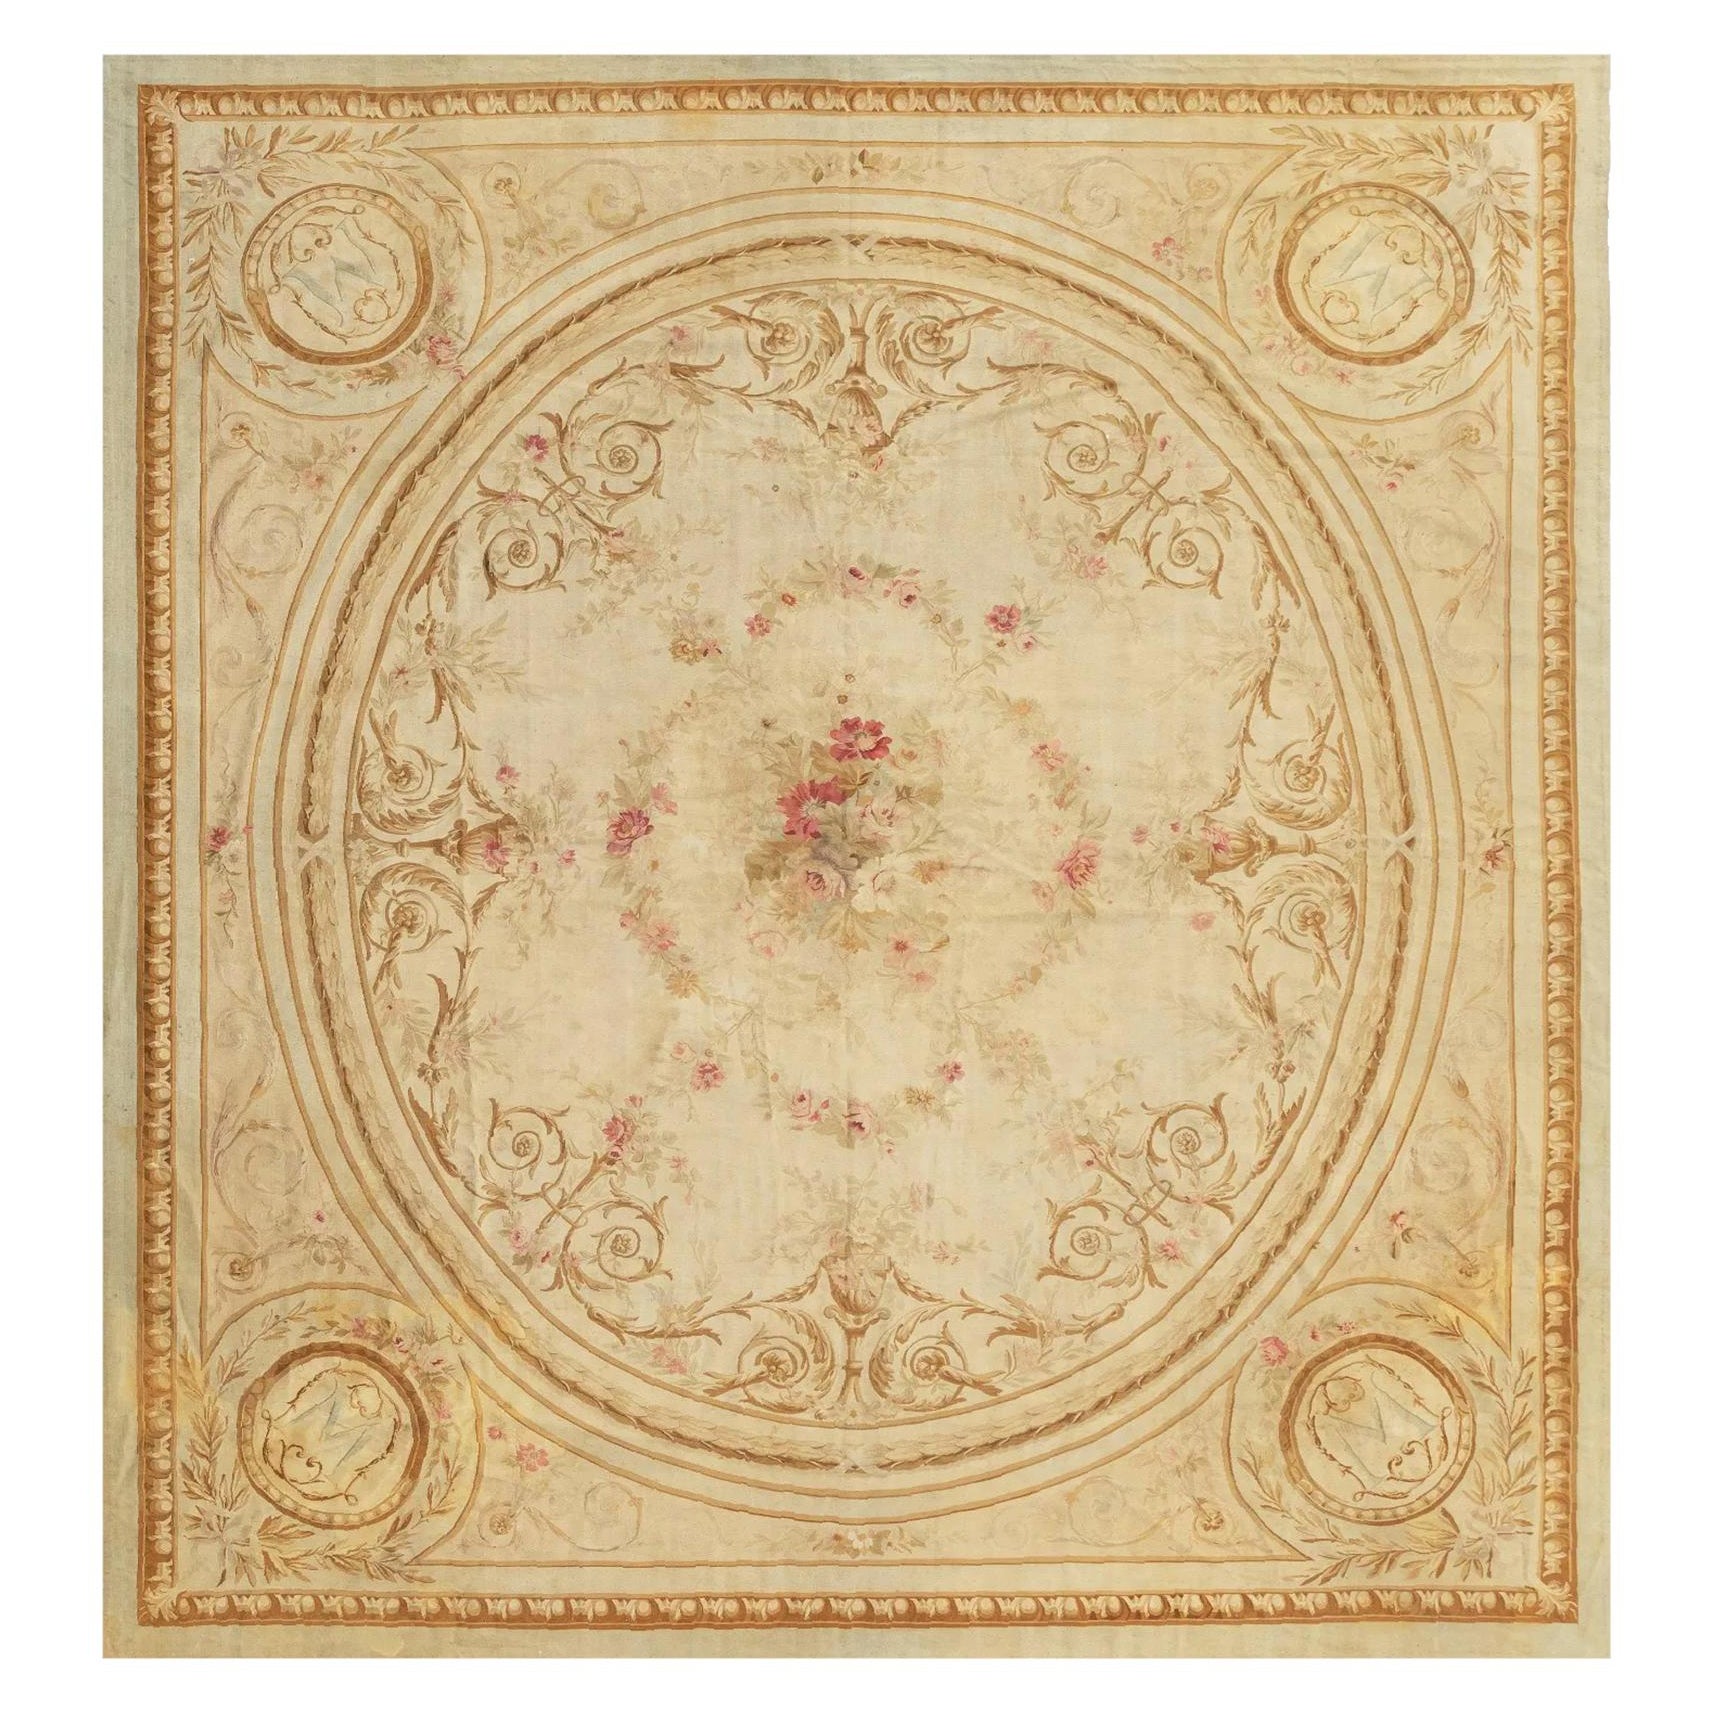 Late 19th Century French Aubusson Carpet ( 15' 6'' x 16' 6'' - 473 x 503 cm )